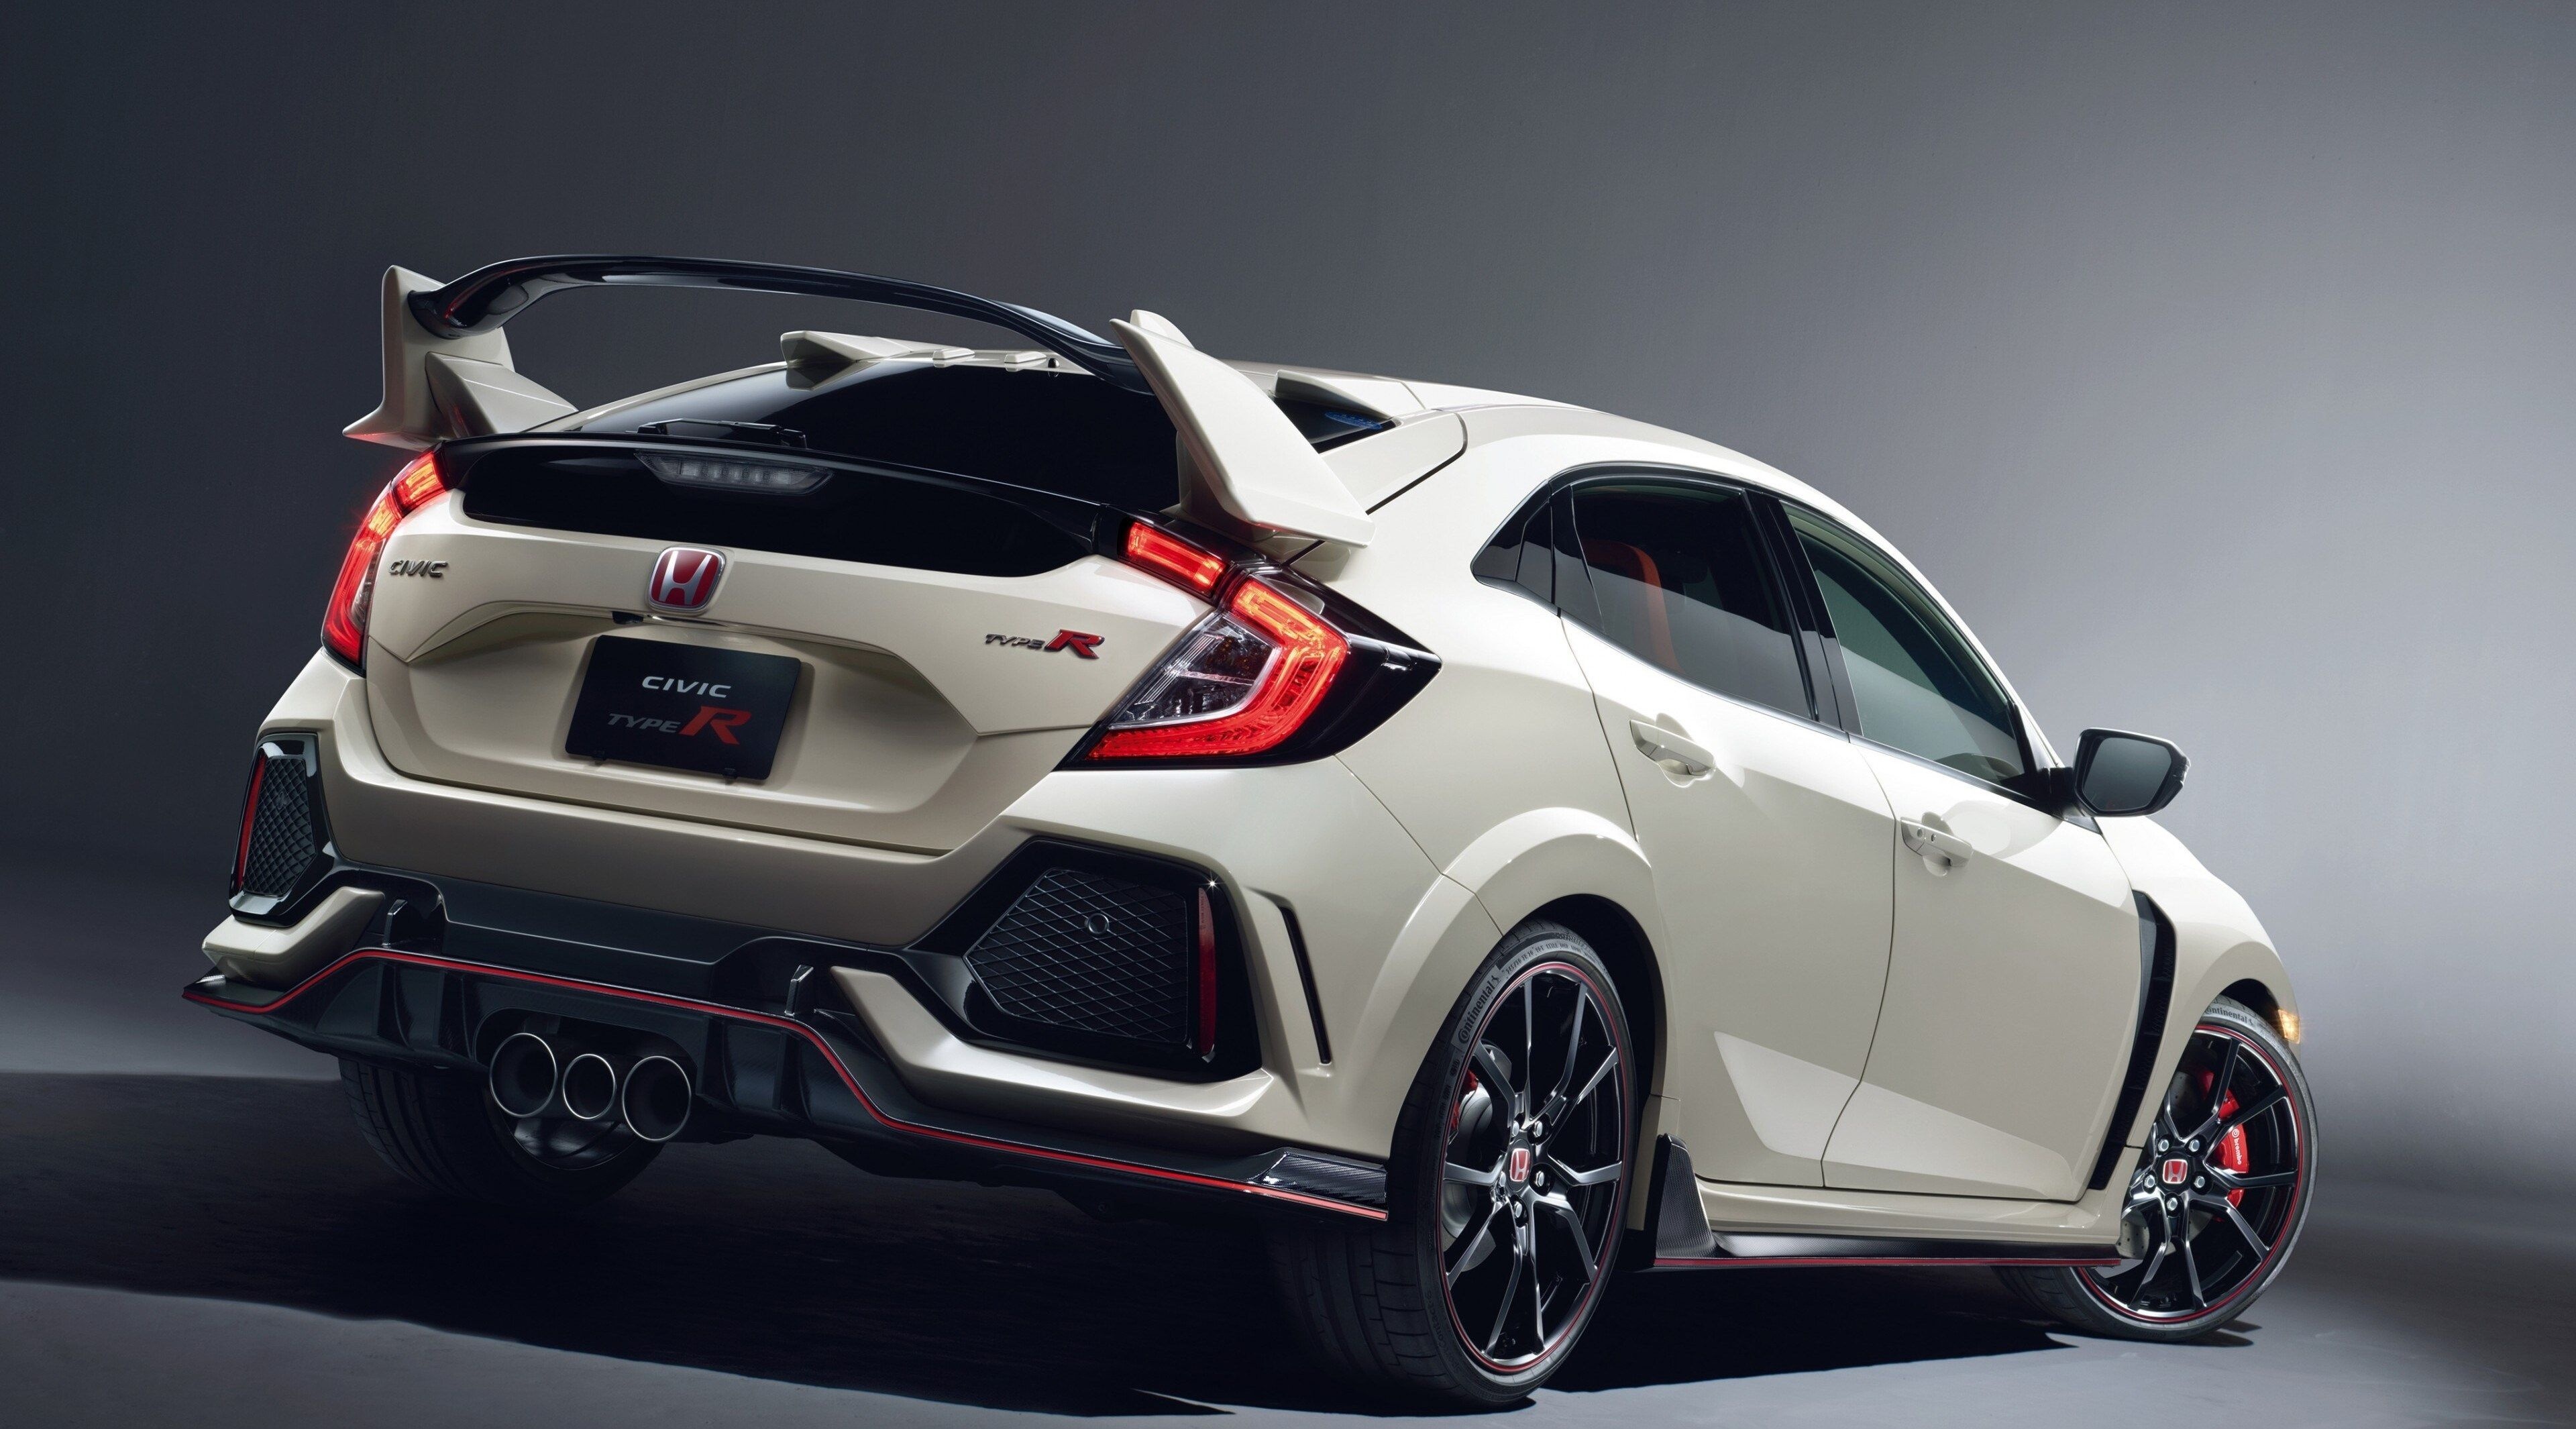 Honda Civic Type R 4K HD wallpapers, High-definition beauty, Honda power, Sporty performance, 3840x2130 HD Desktop